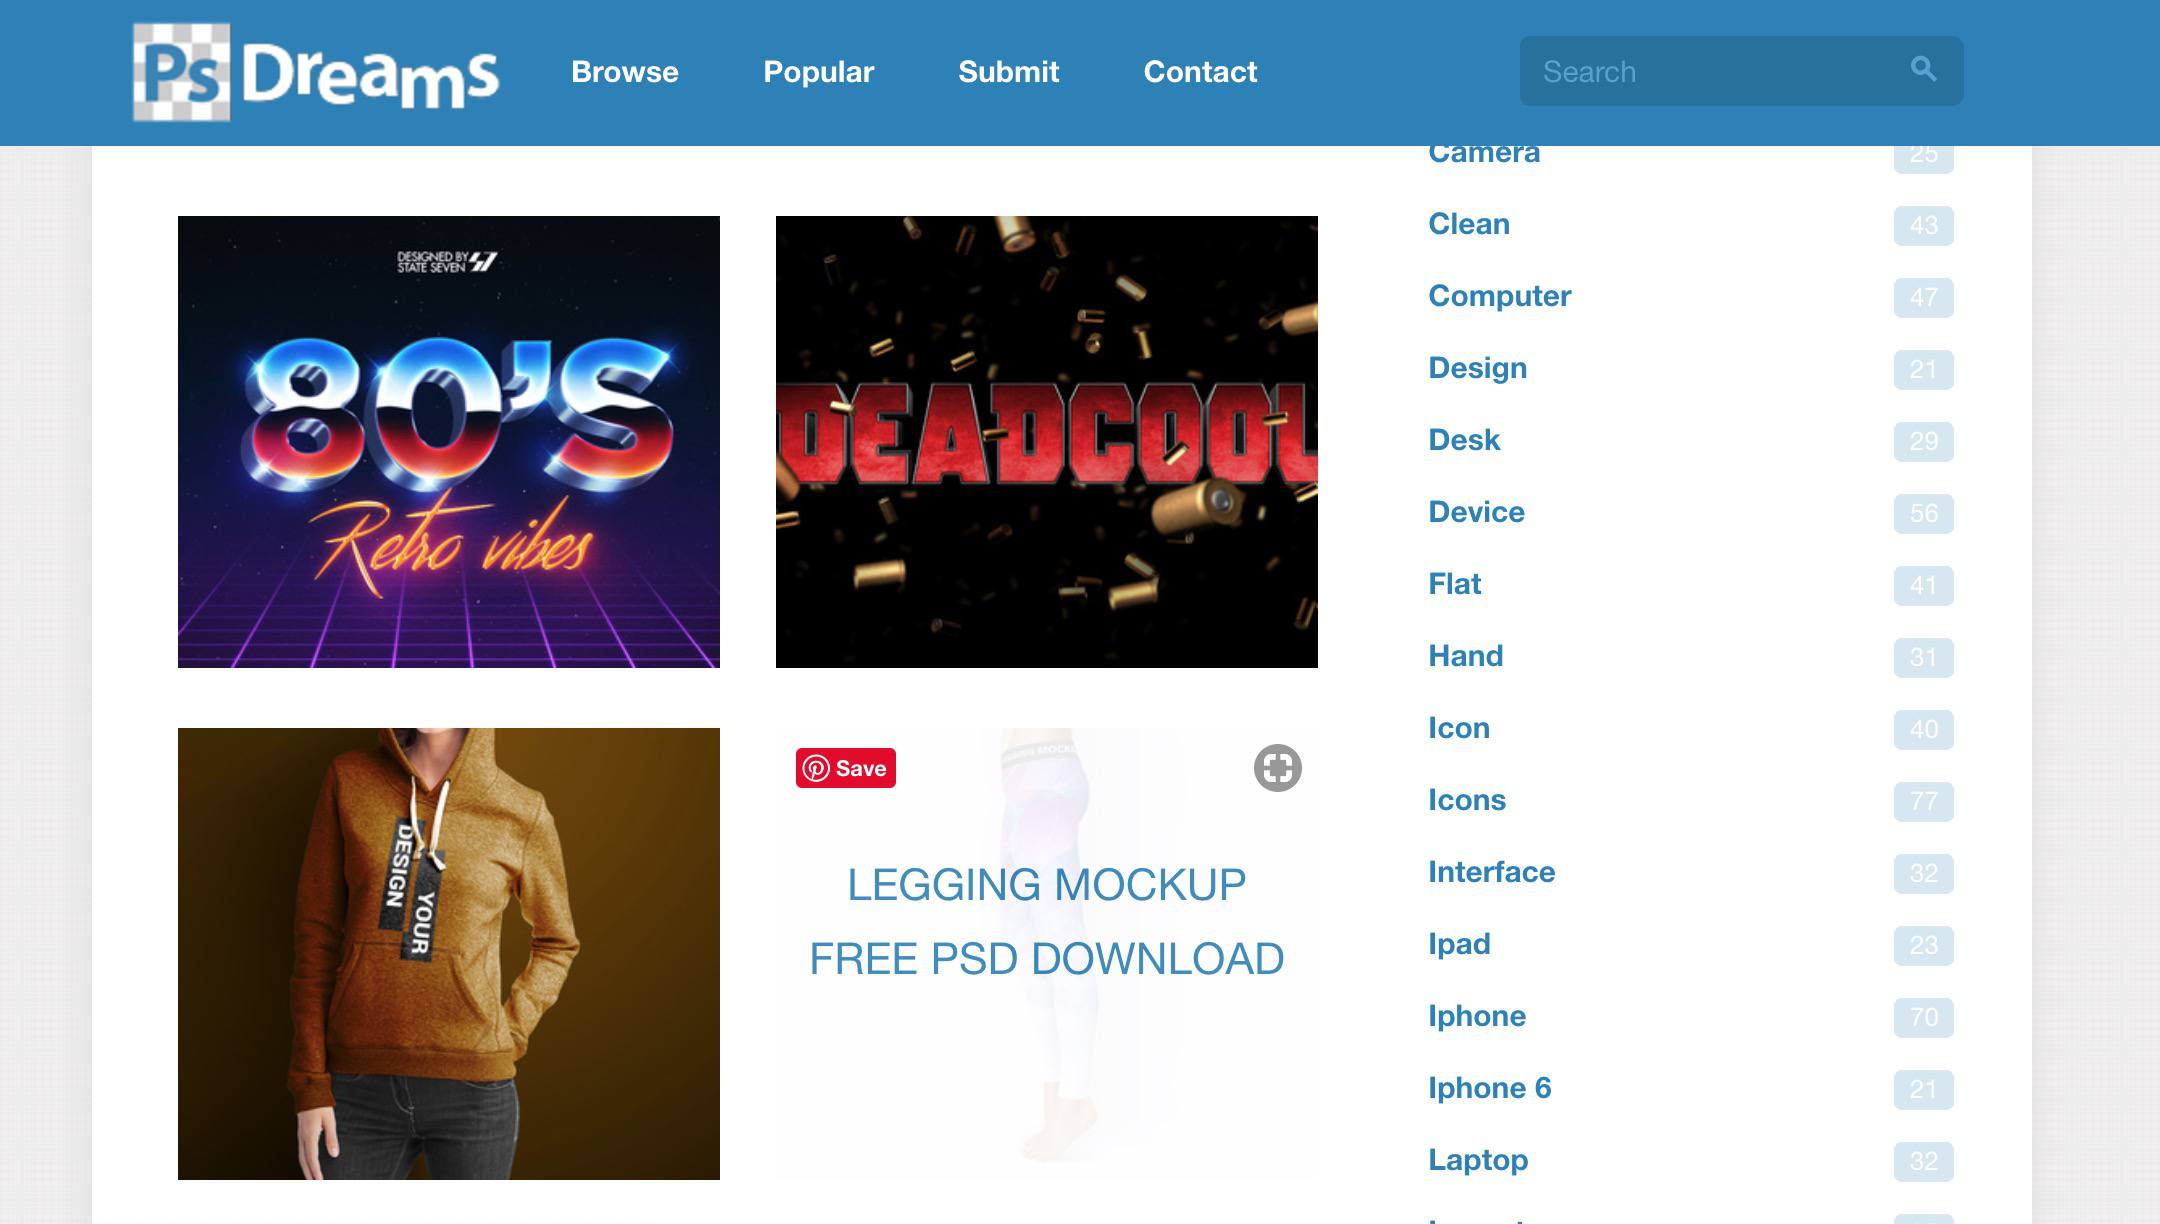 PsDreams-webpagina met 80s Retro-vibes, Deadcool en Legging-mockup gratis PSD-download